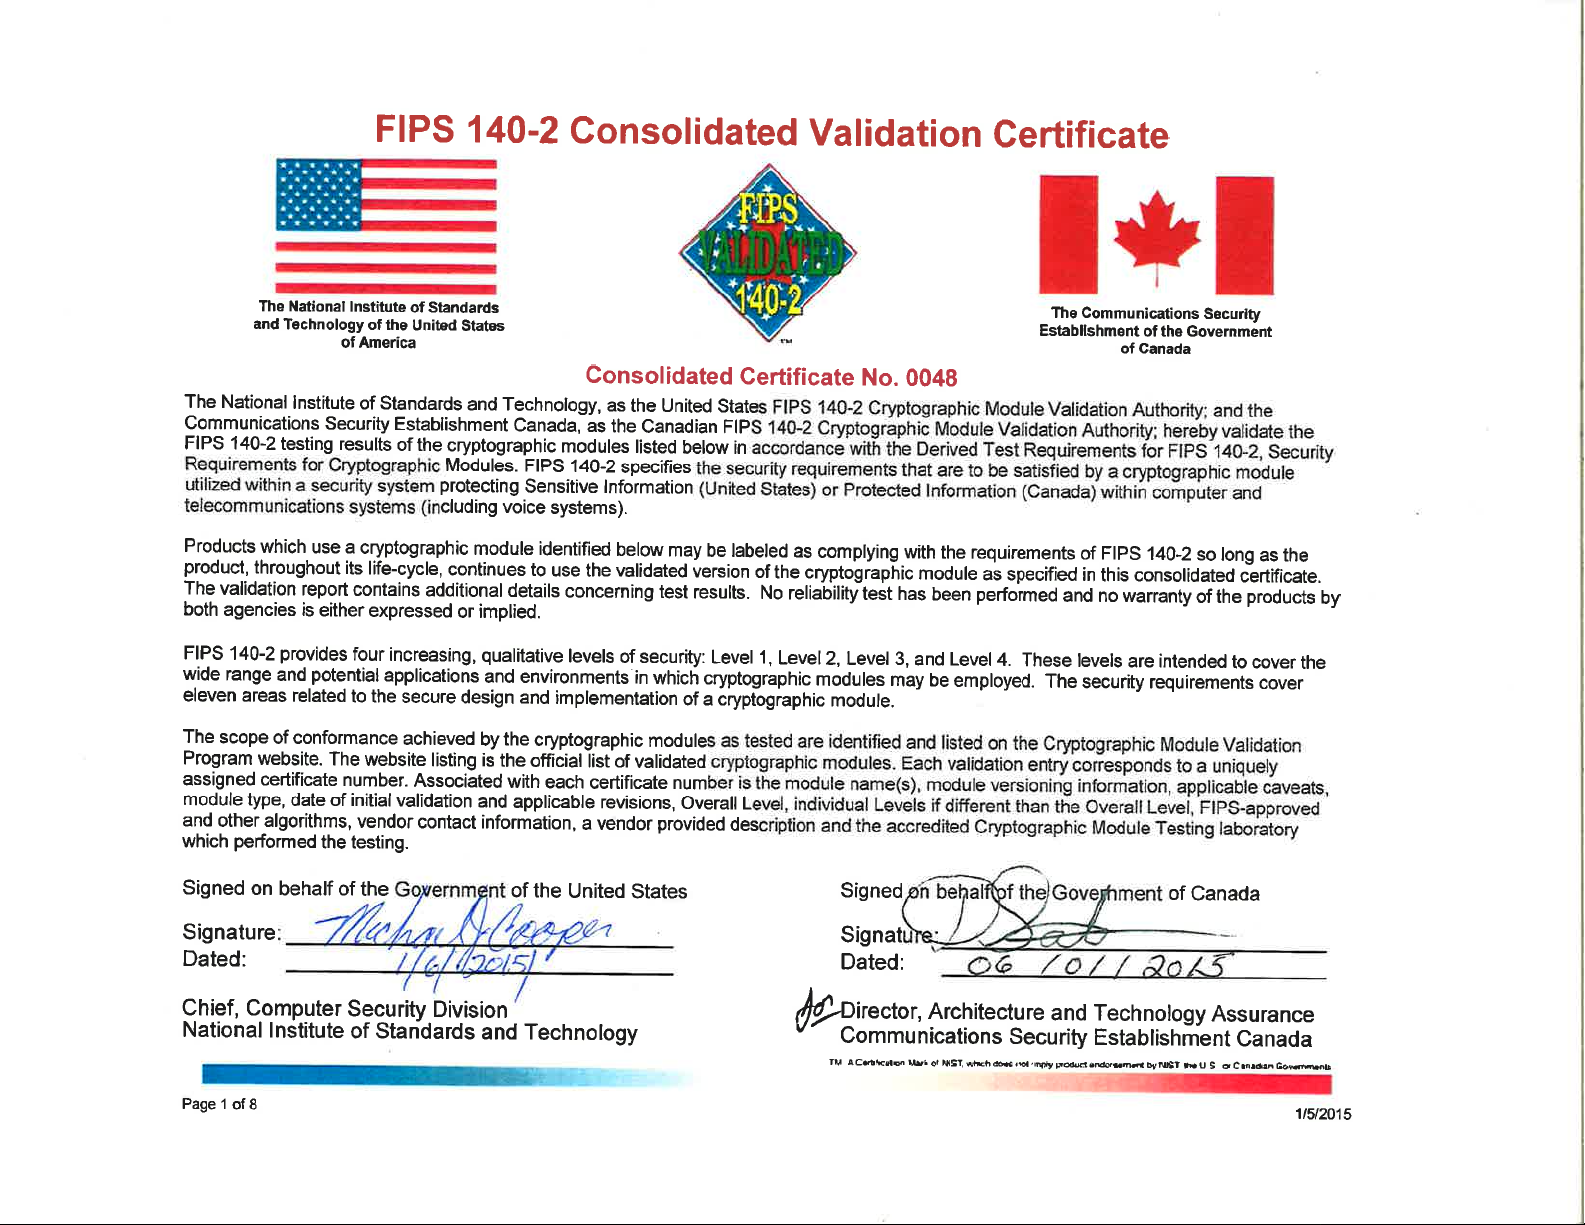 Validate certificate. FIPS 140-2.